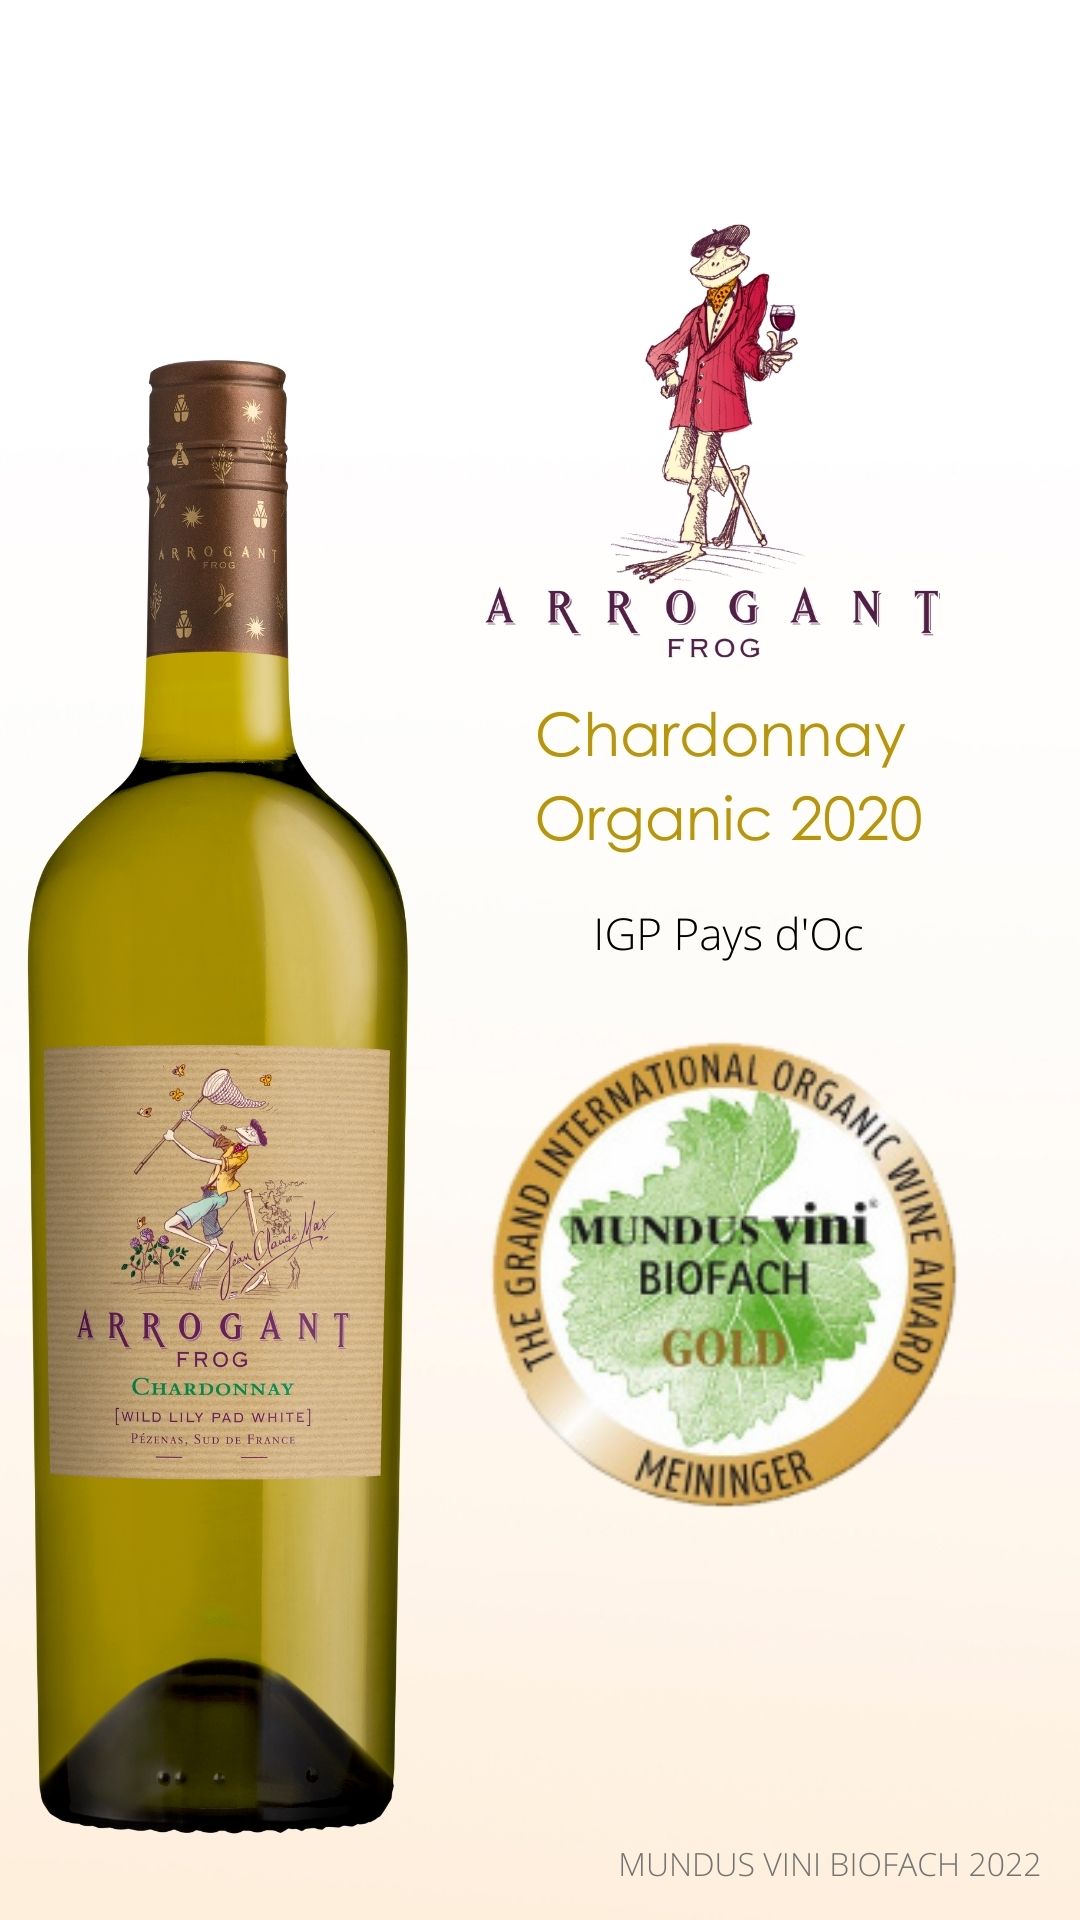 Arrogant frog Chardonnay Mundus Vini Biofach 2022